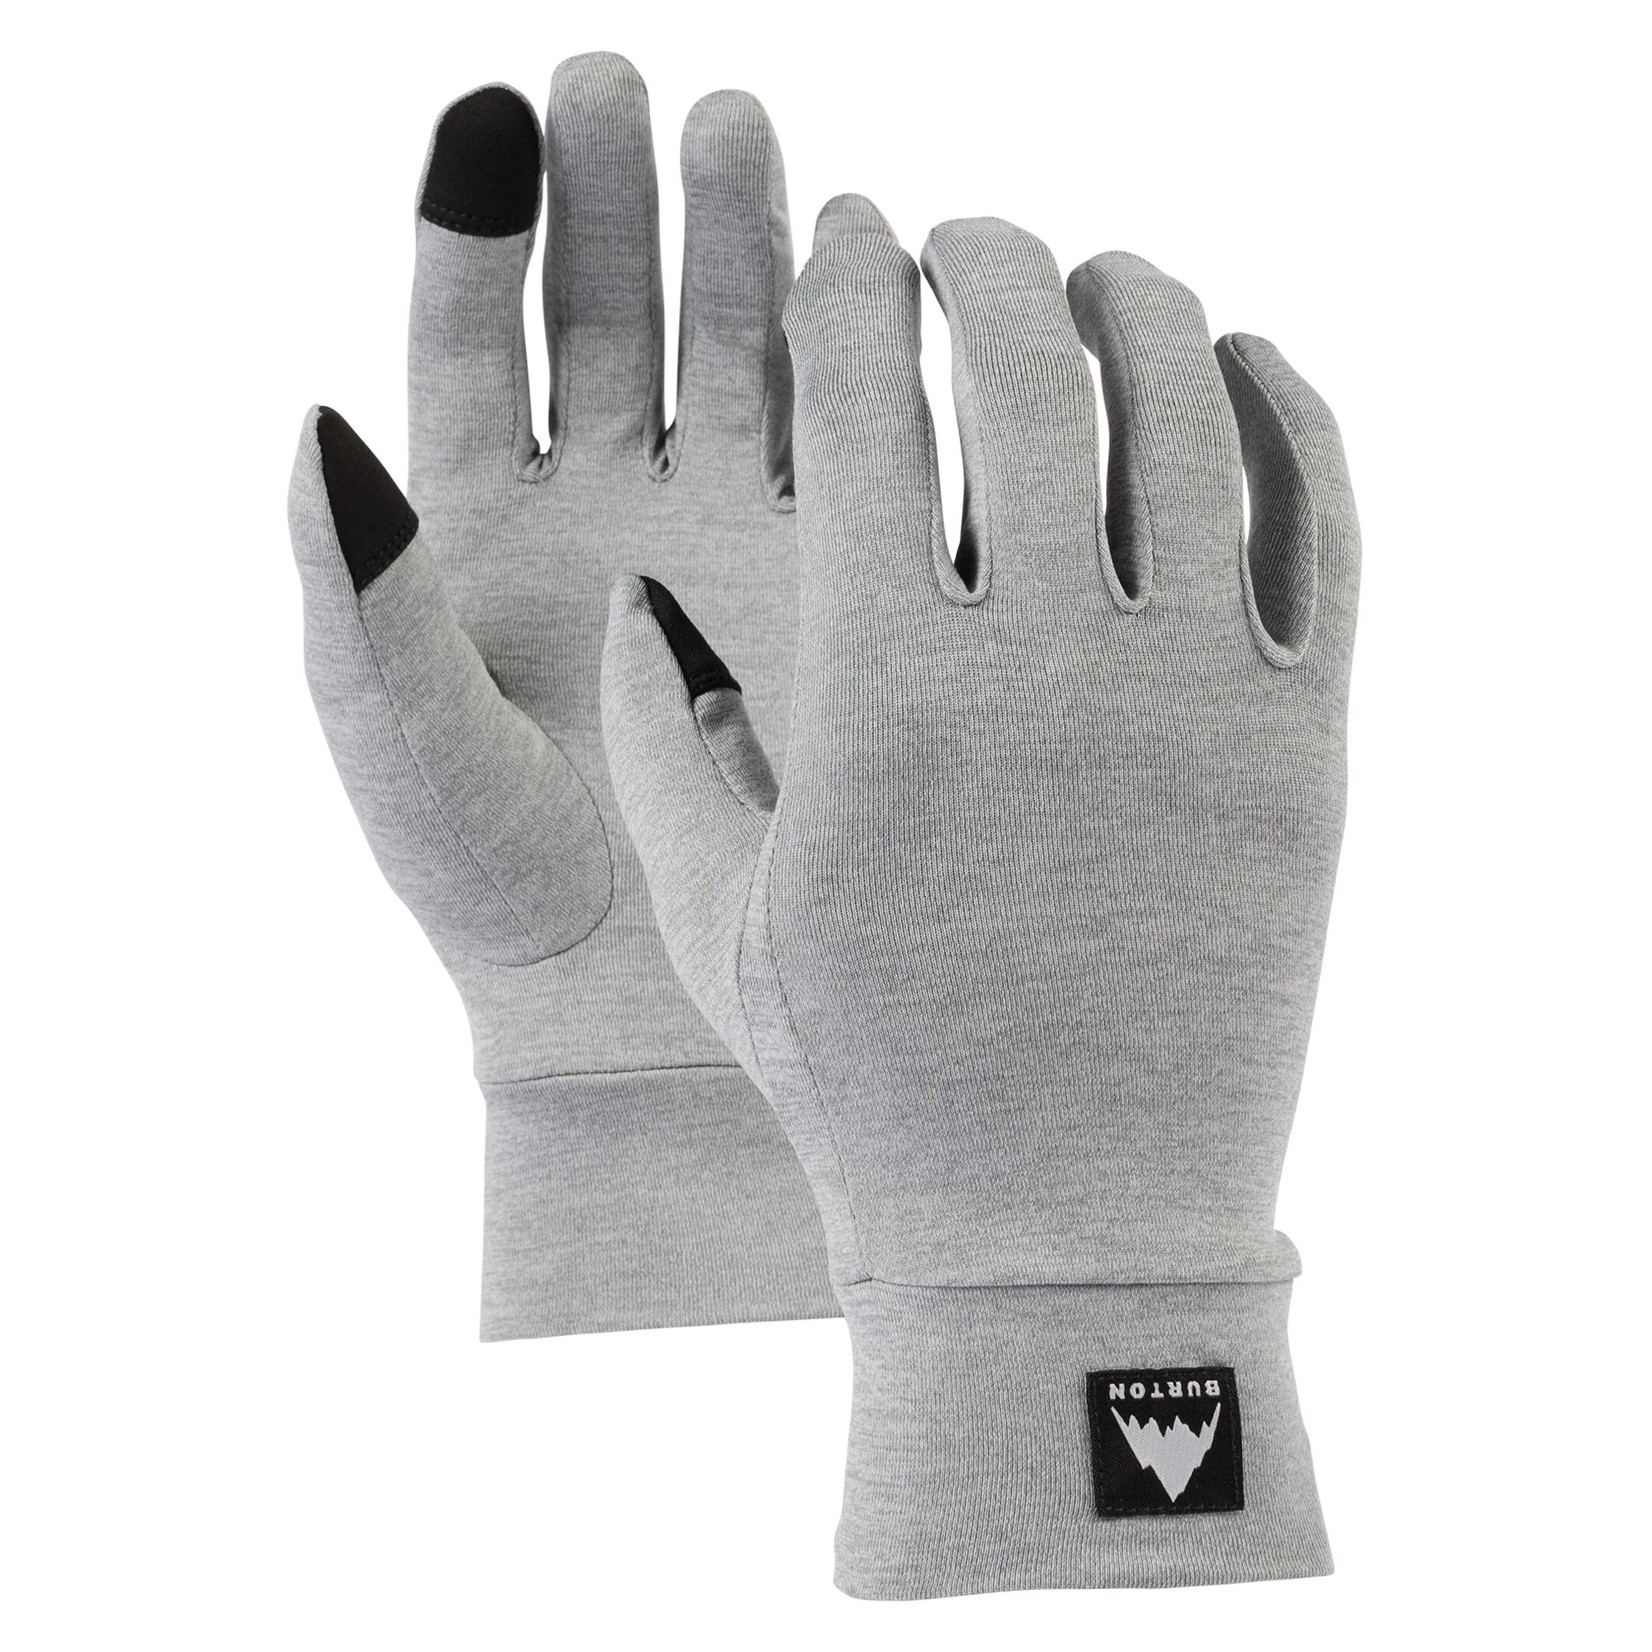 BURTON Touchscreen Glove Liner